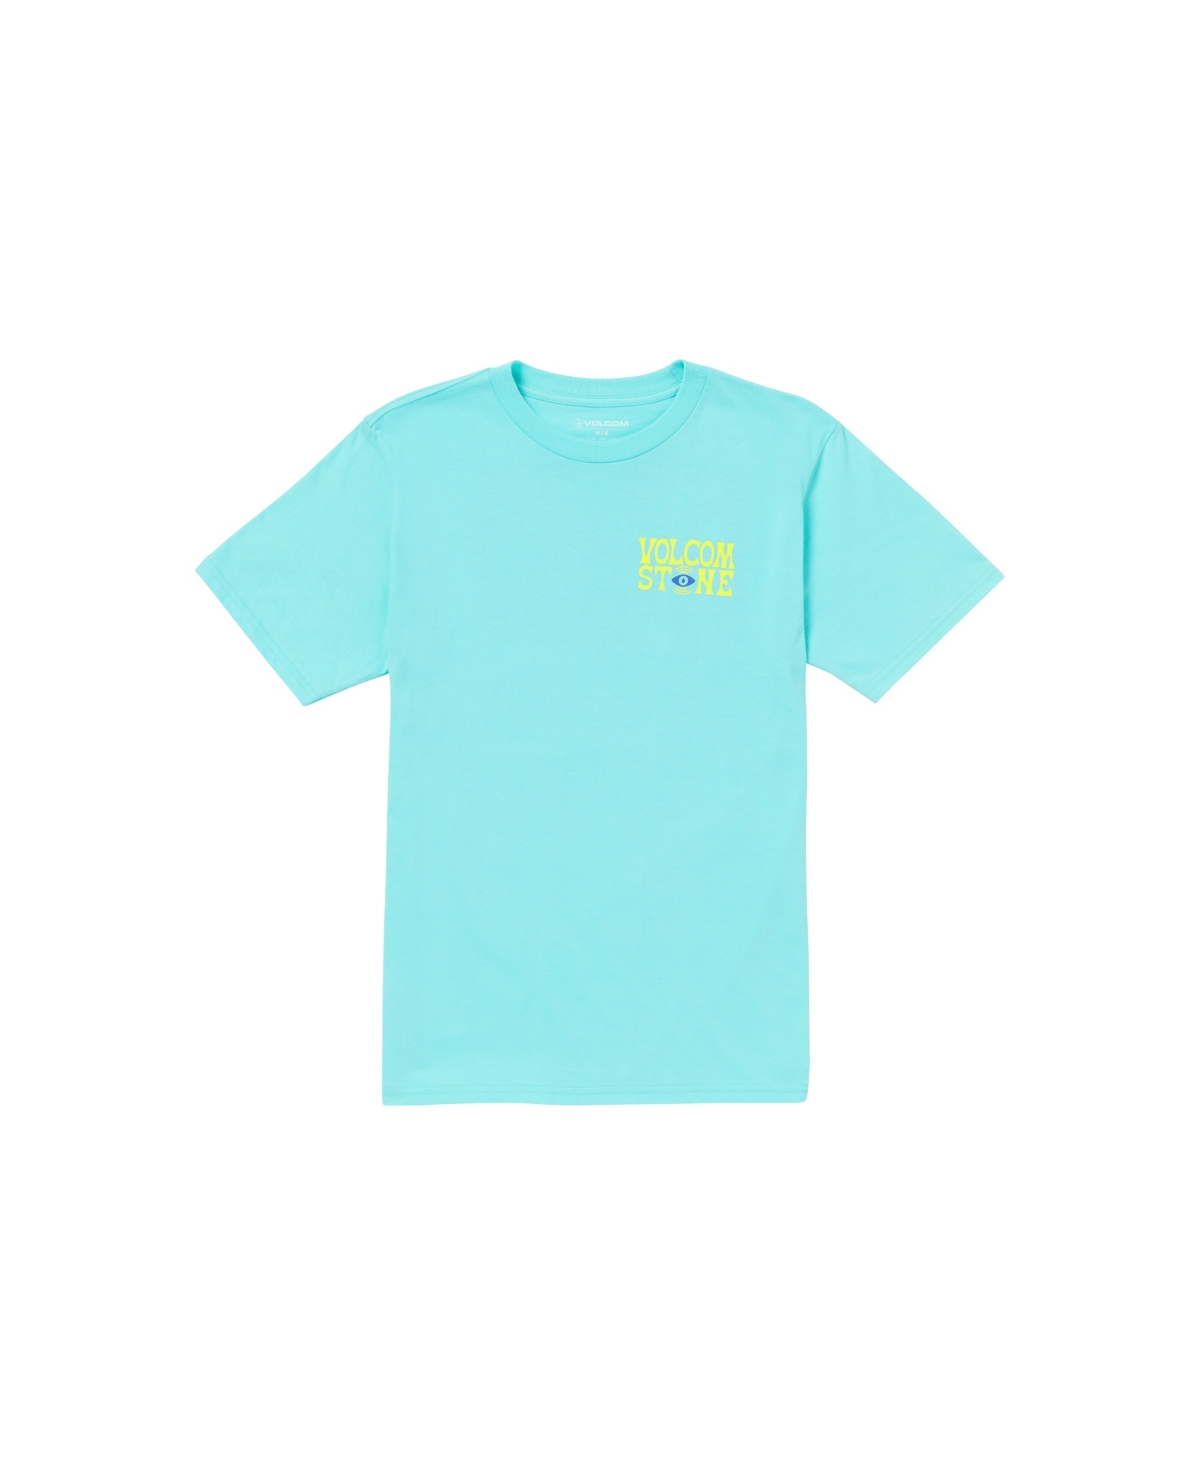 Viz Fray Short Sleeve Tee T-shirt - Crete Blue